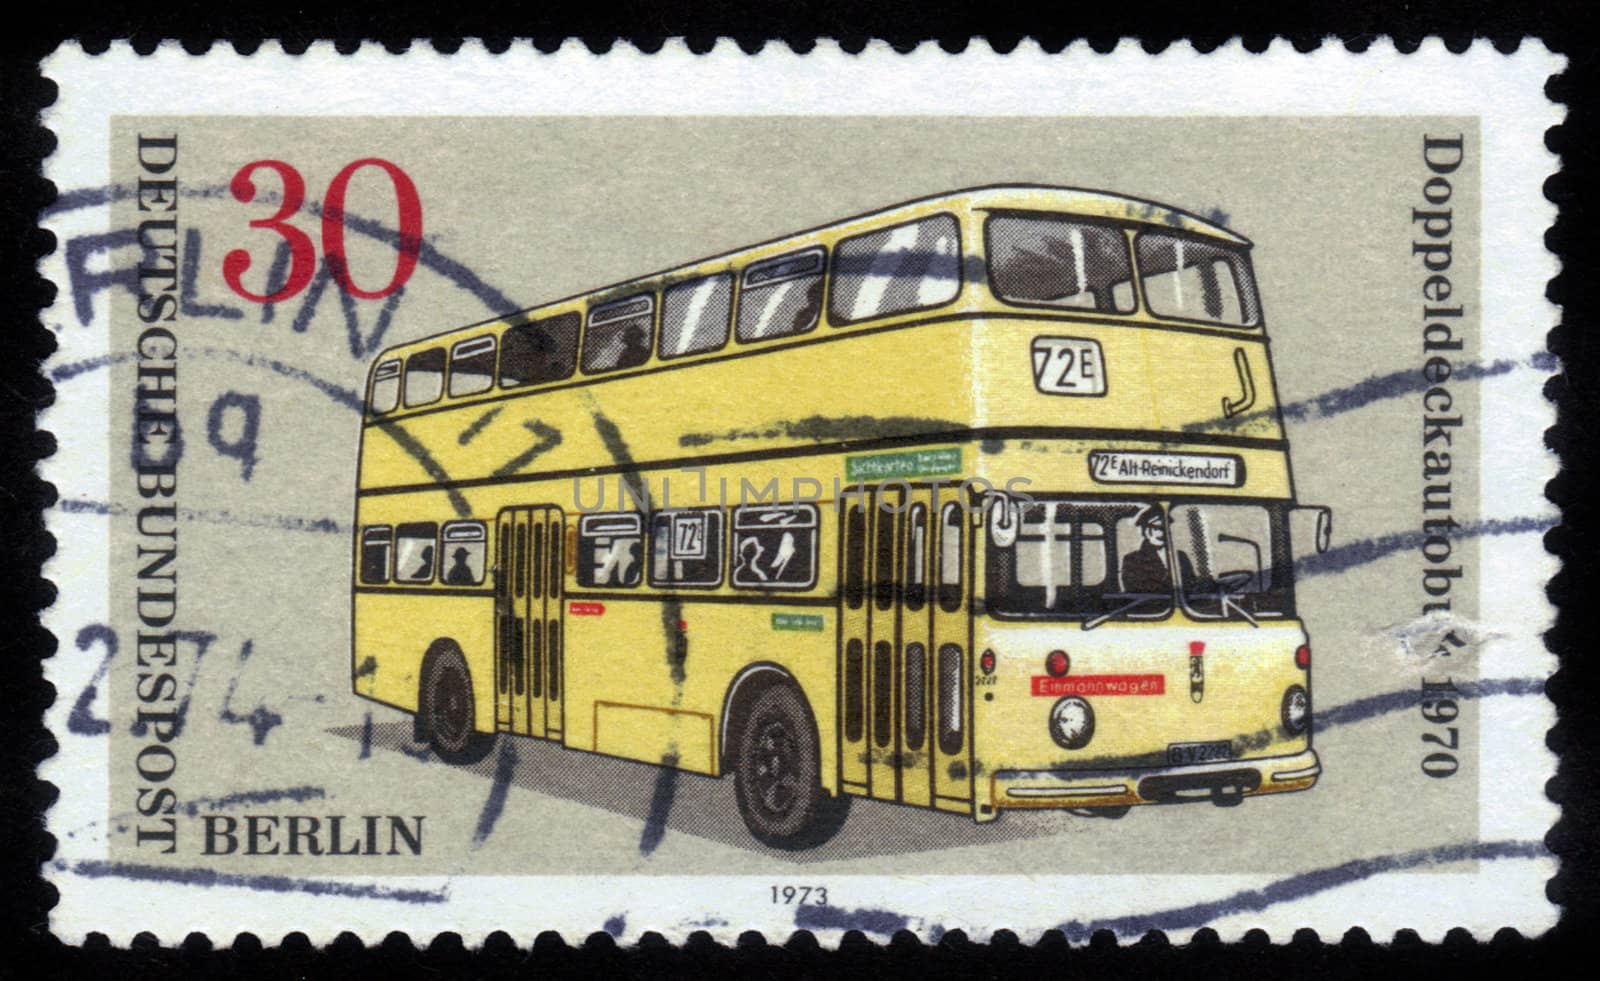 FEDERAL REPUBLIC OF GERMANY - CIRCA 1973: A stamp printed in the Federal Republic of Germany shows double decker city bus 1970, circa 1973